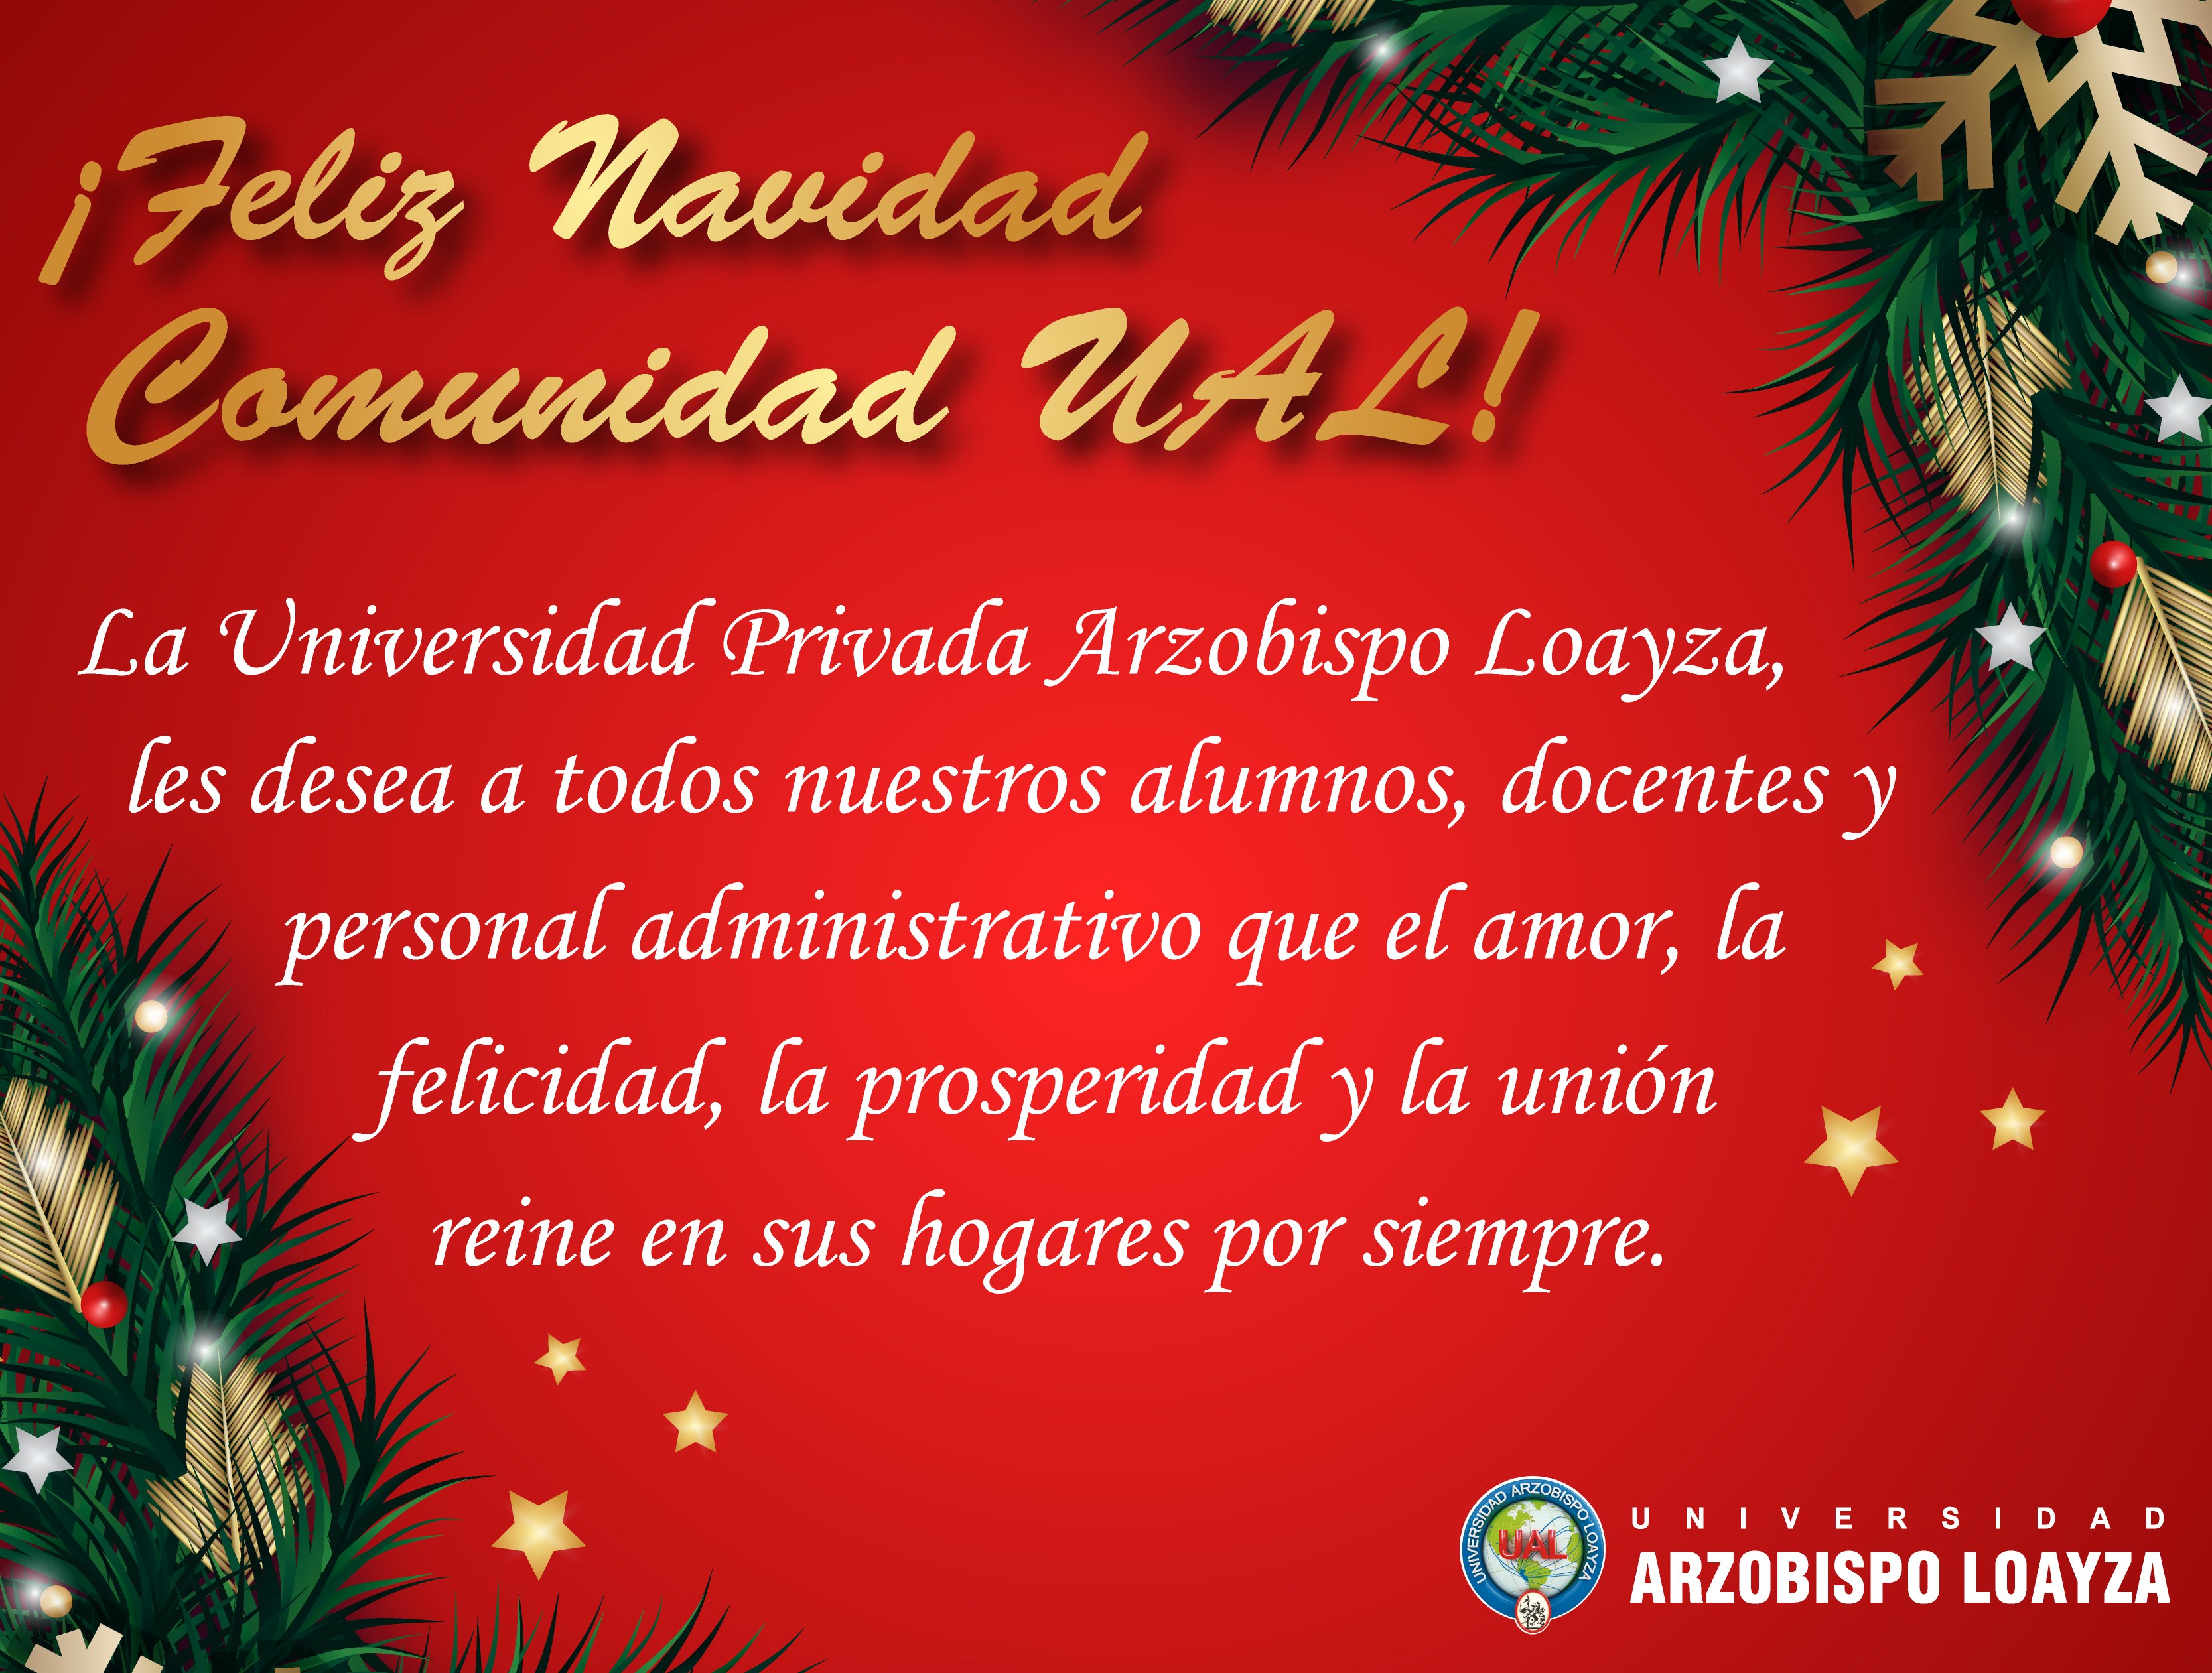 Universidad Privada Arzobispo Loayza on Twitter: 